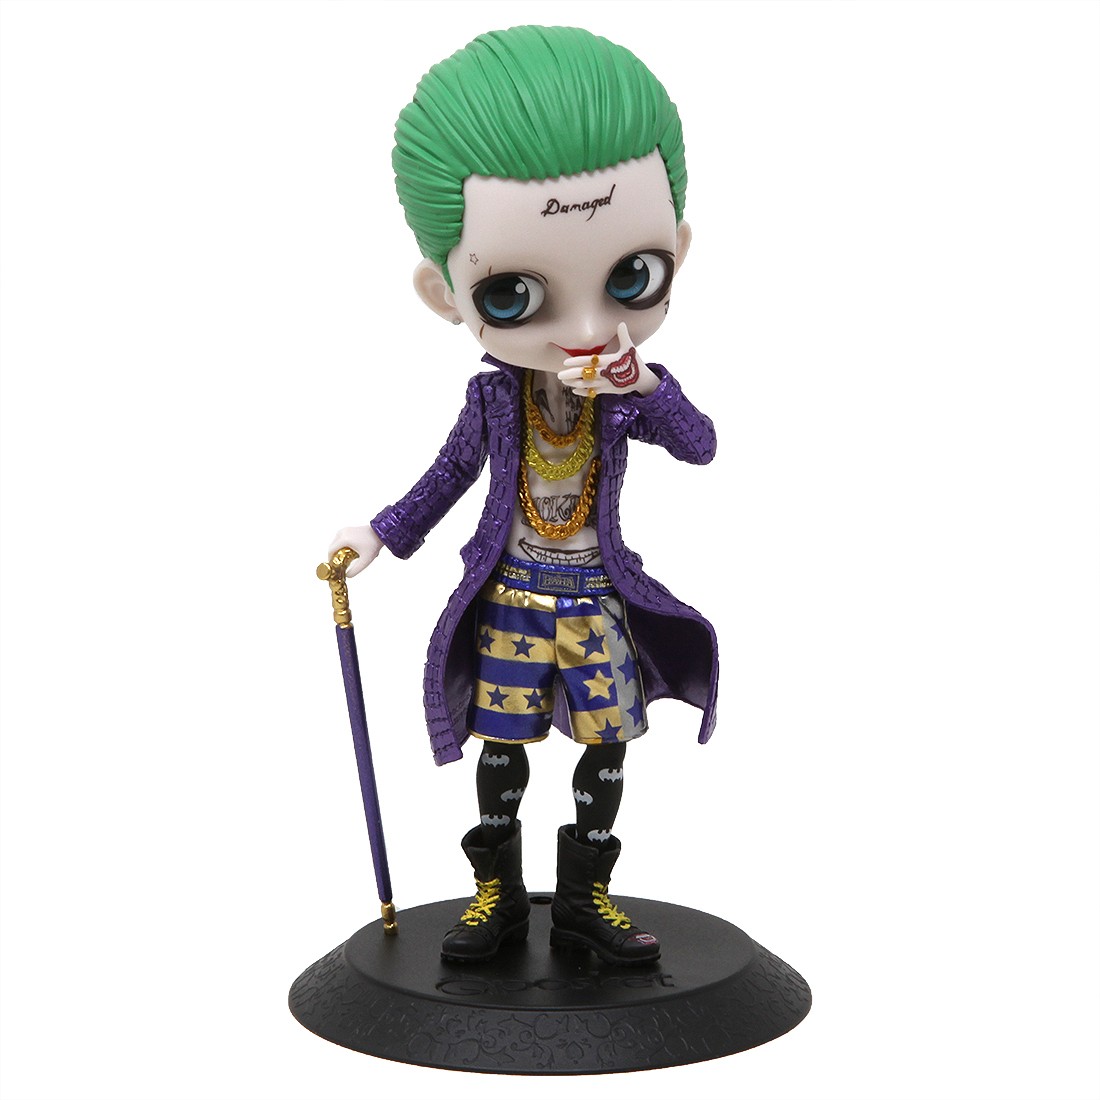 Banpresto Q Posket Suicide Squad Joker Figure - Ver B (purple)